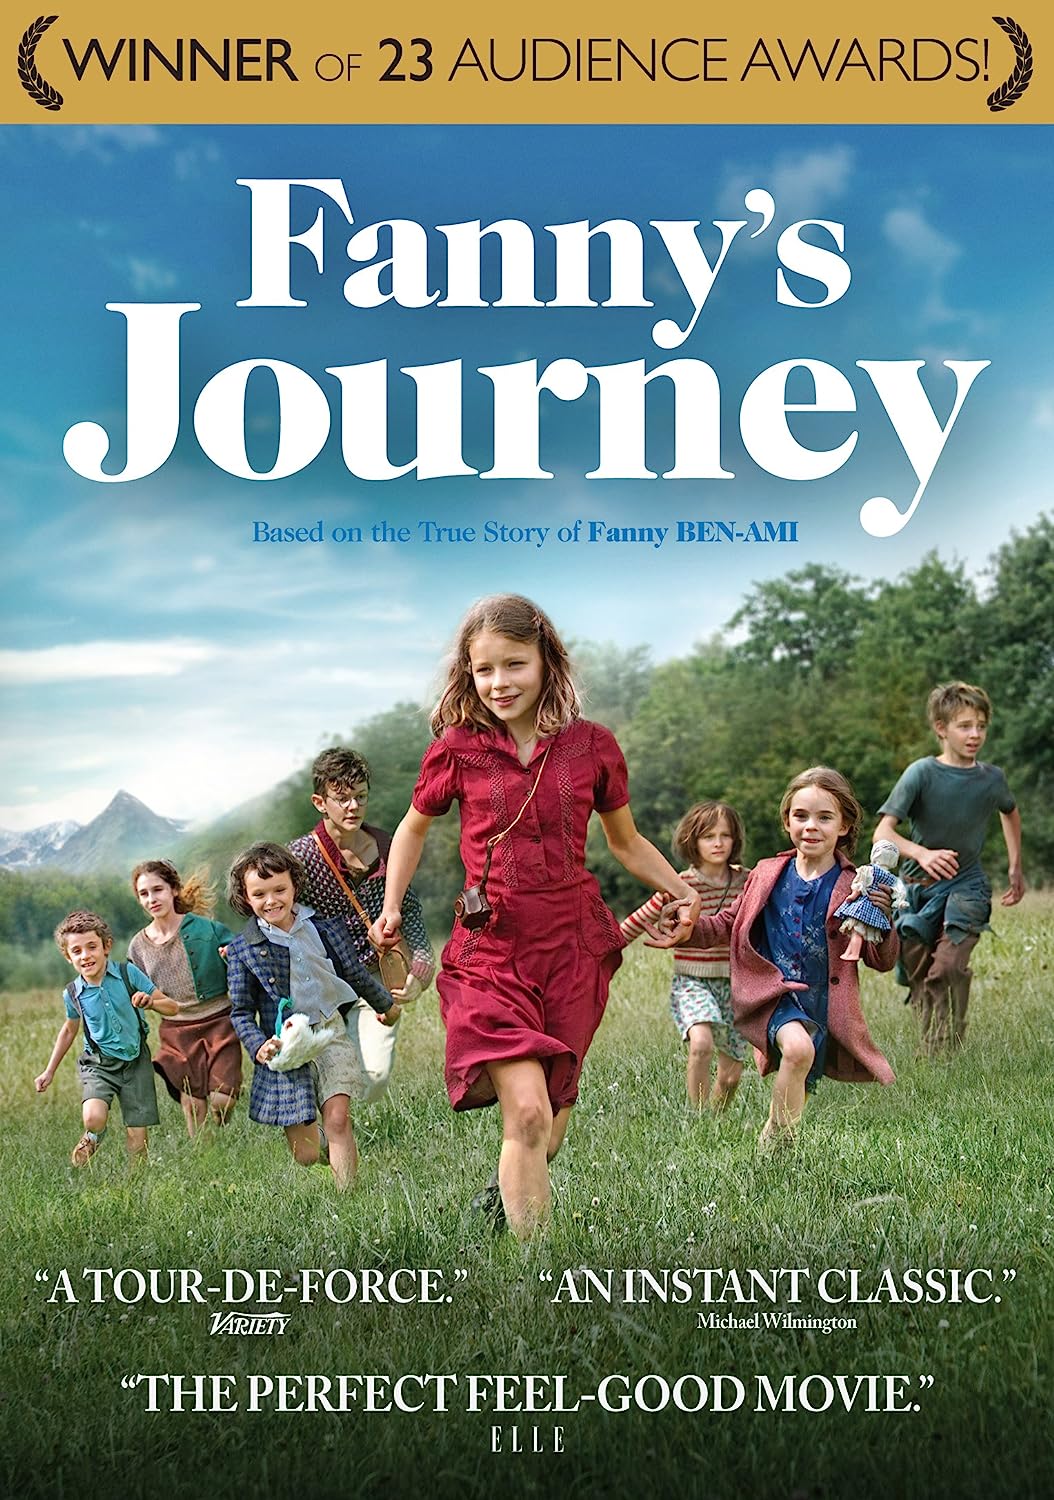 Fanny's Journey